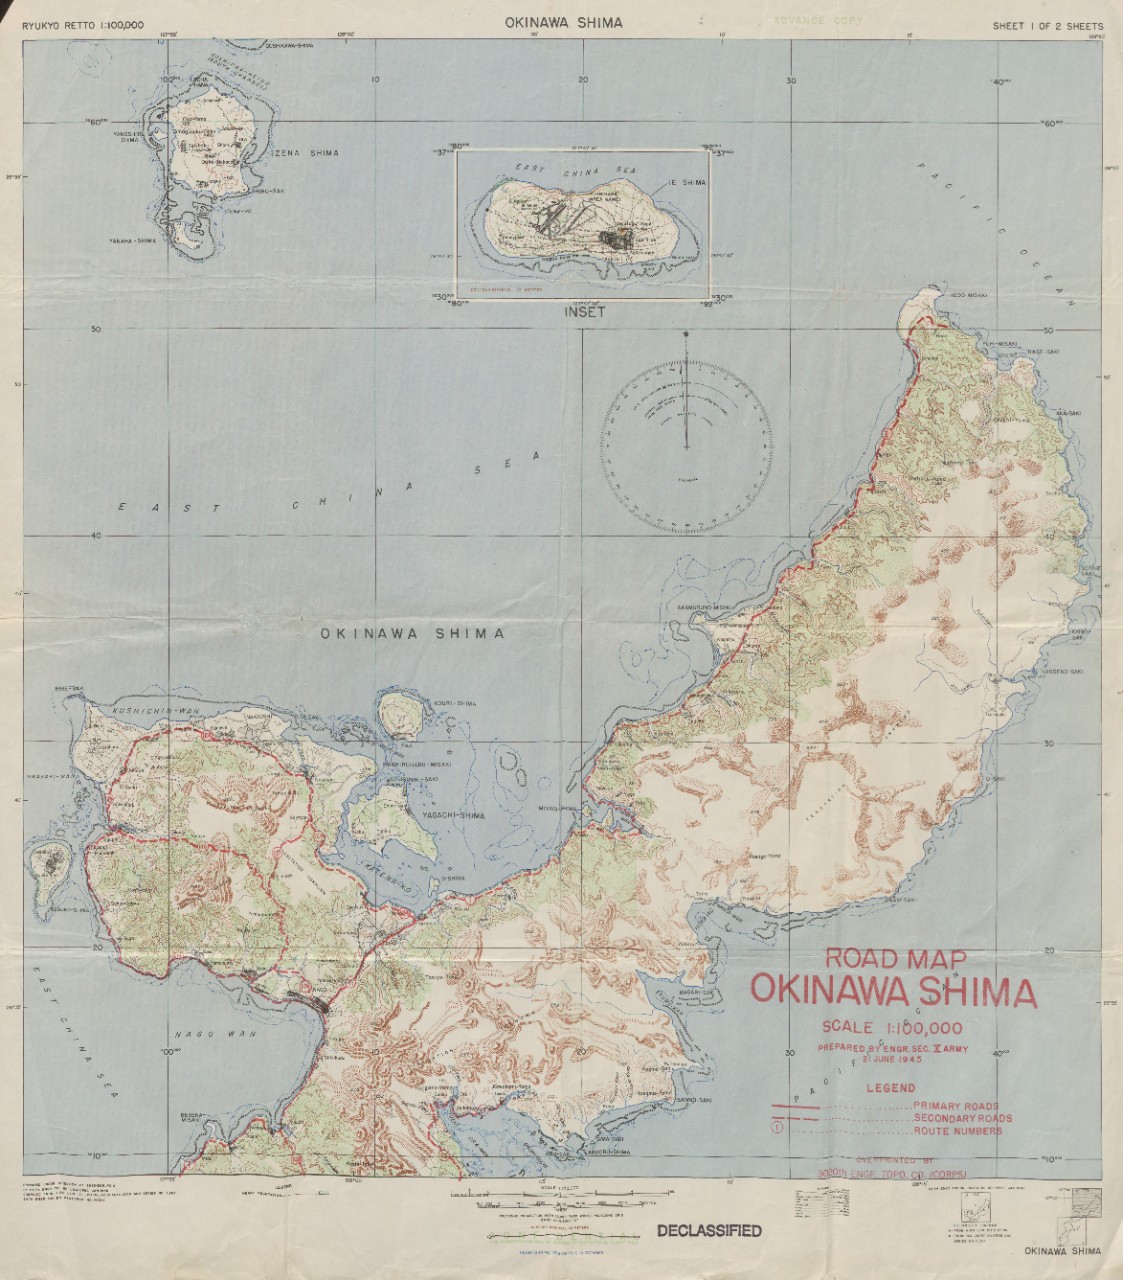 Okinawa Shima Road Map (1 of 2)